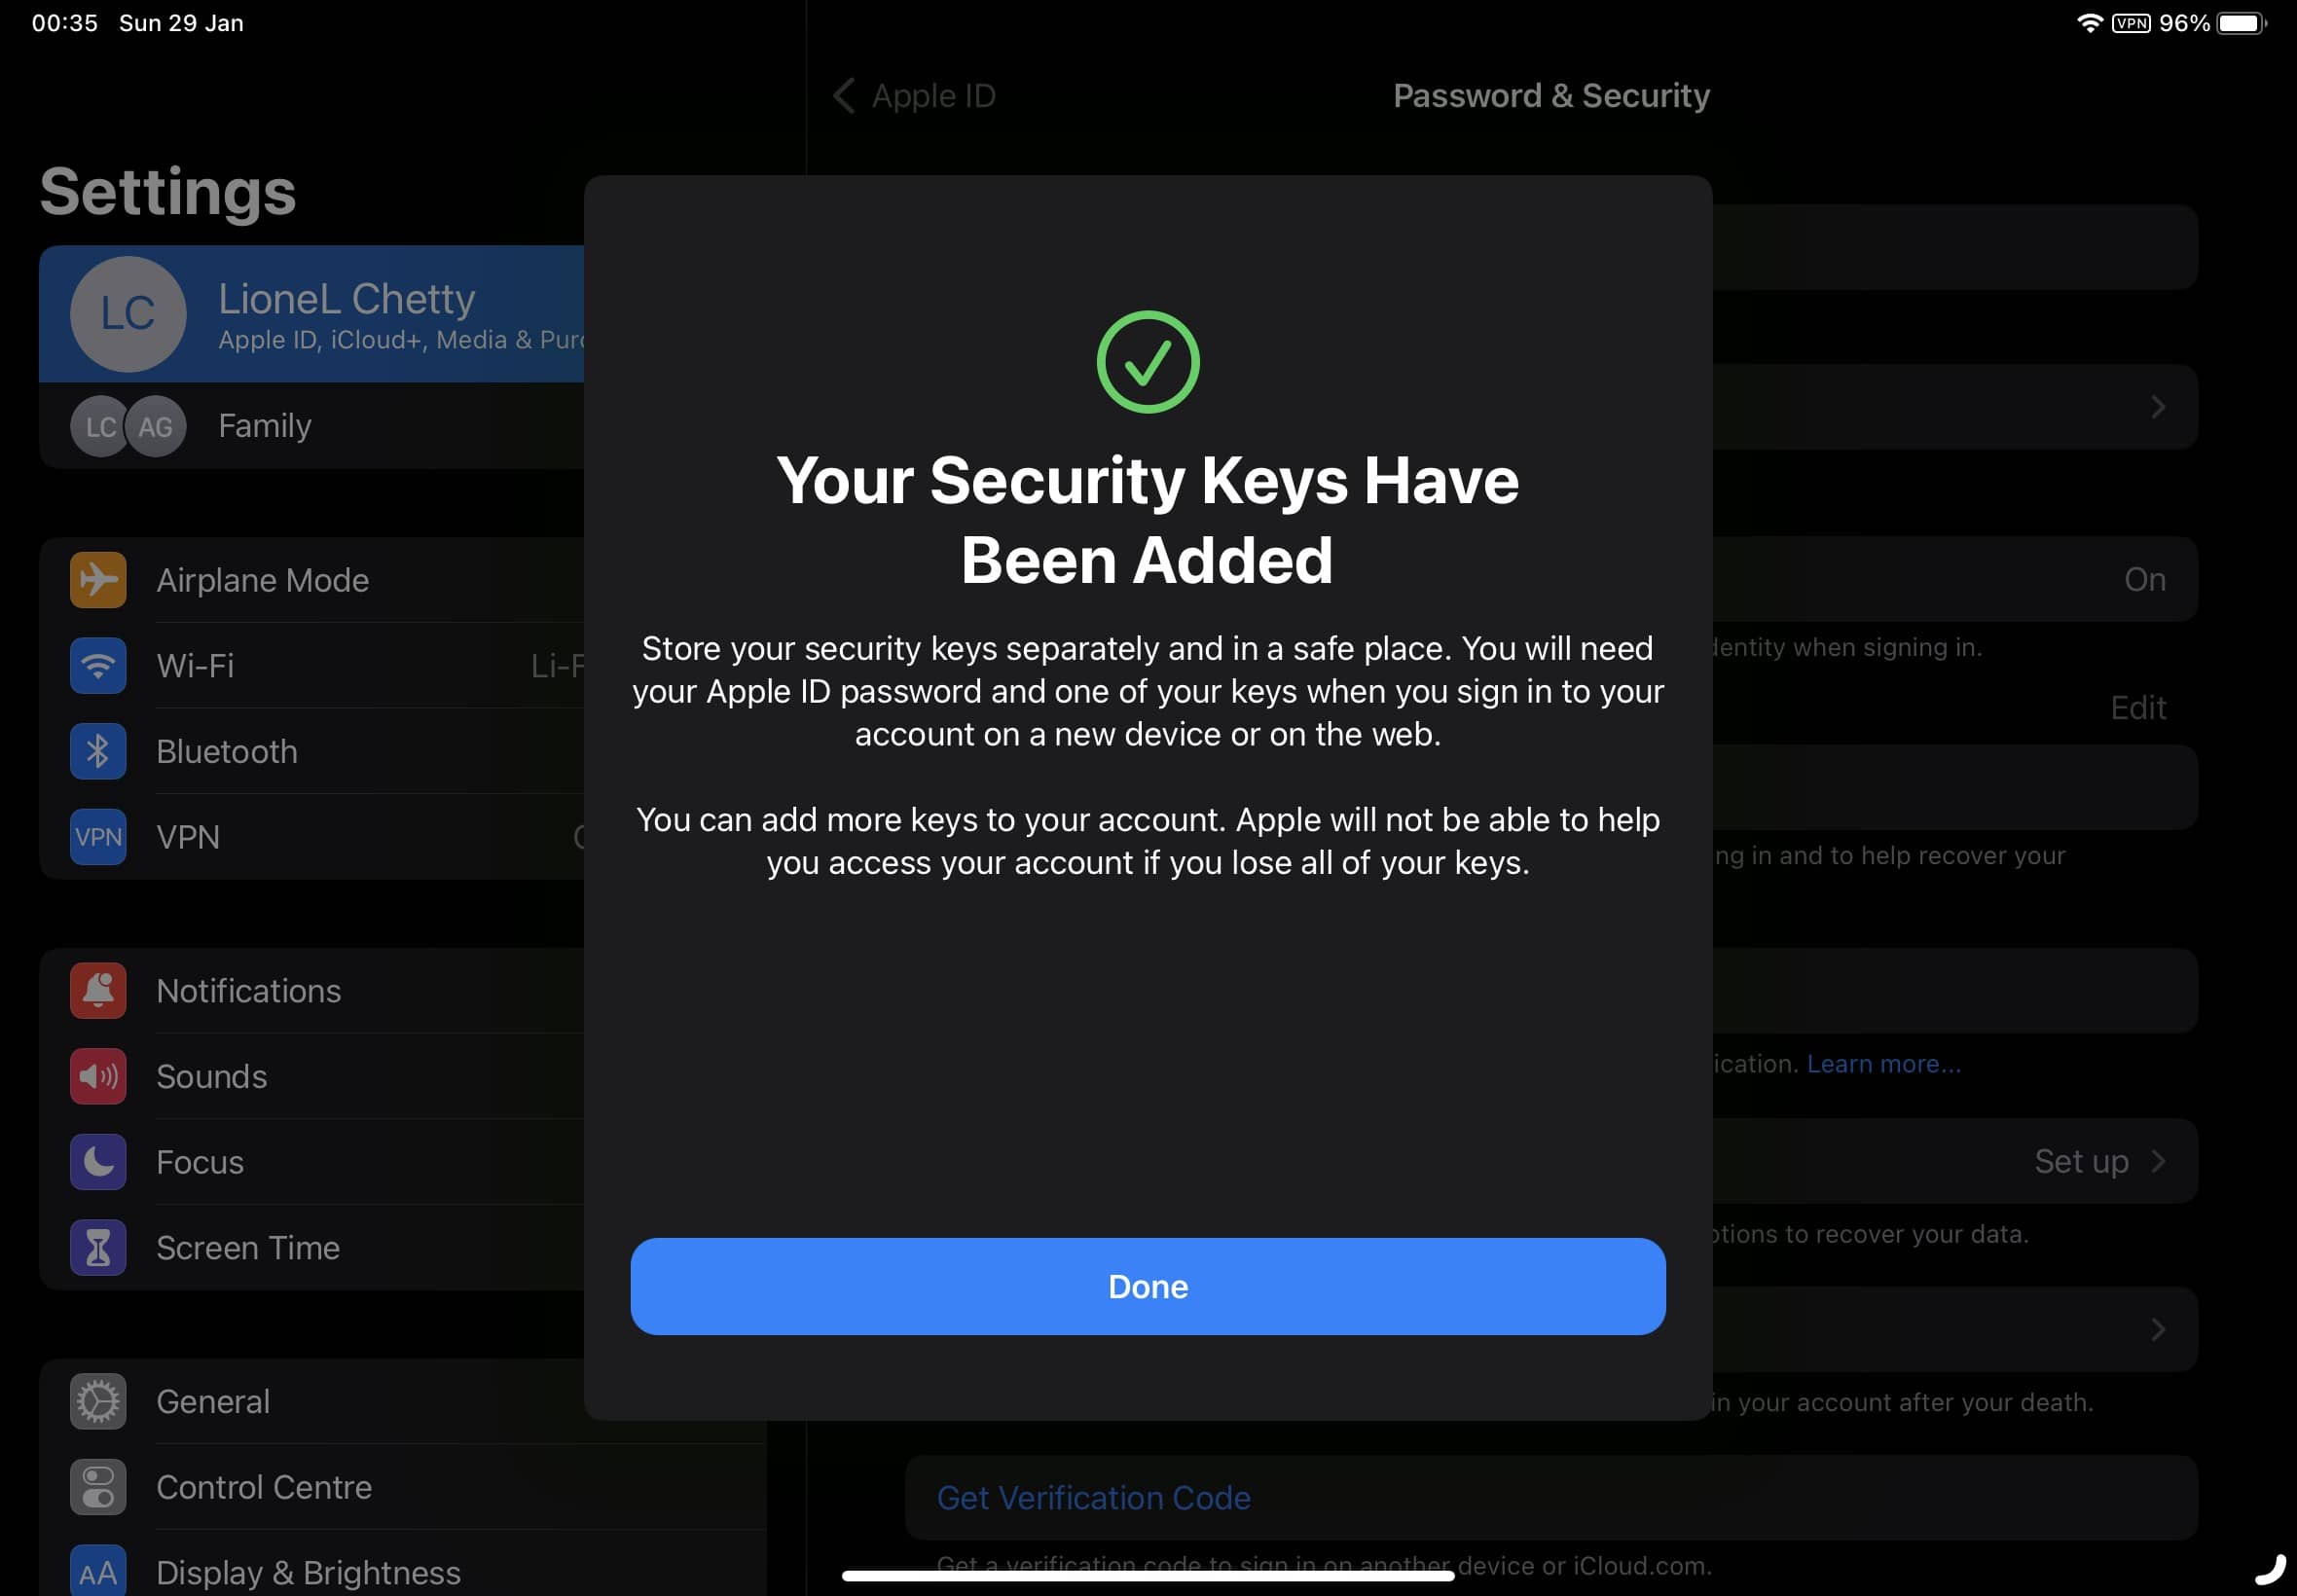 Security Keys for Apple ID